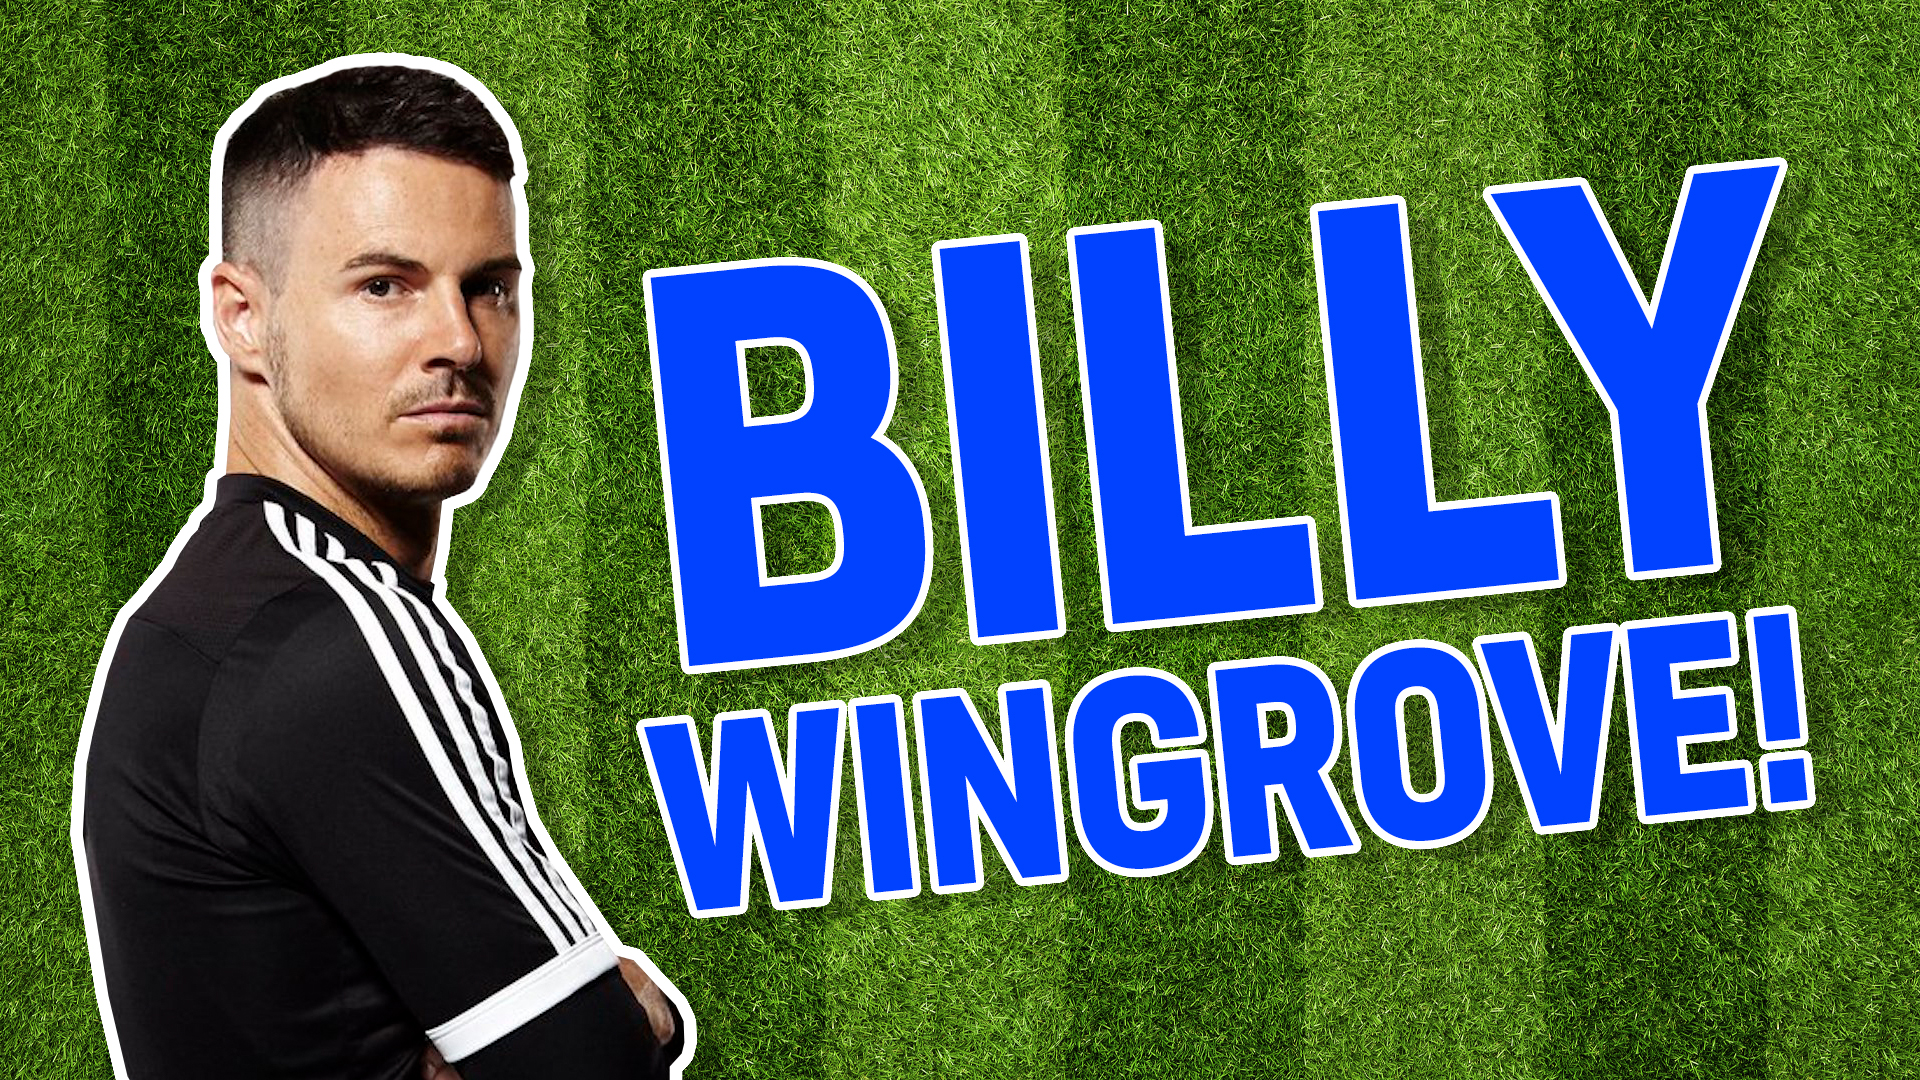 Result: Billy Wingrove